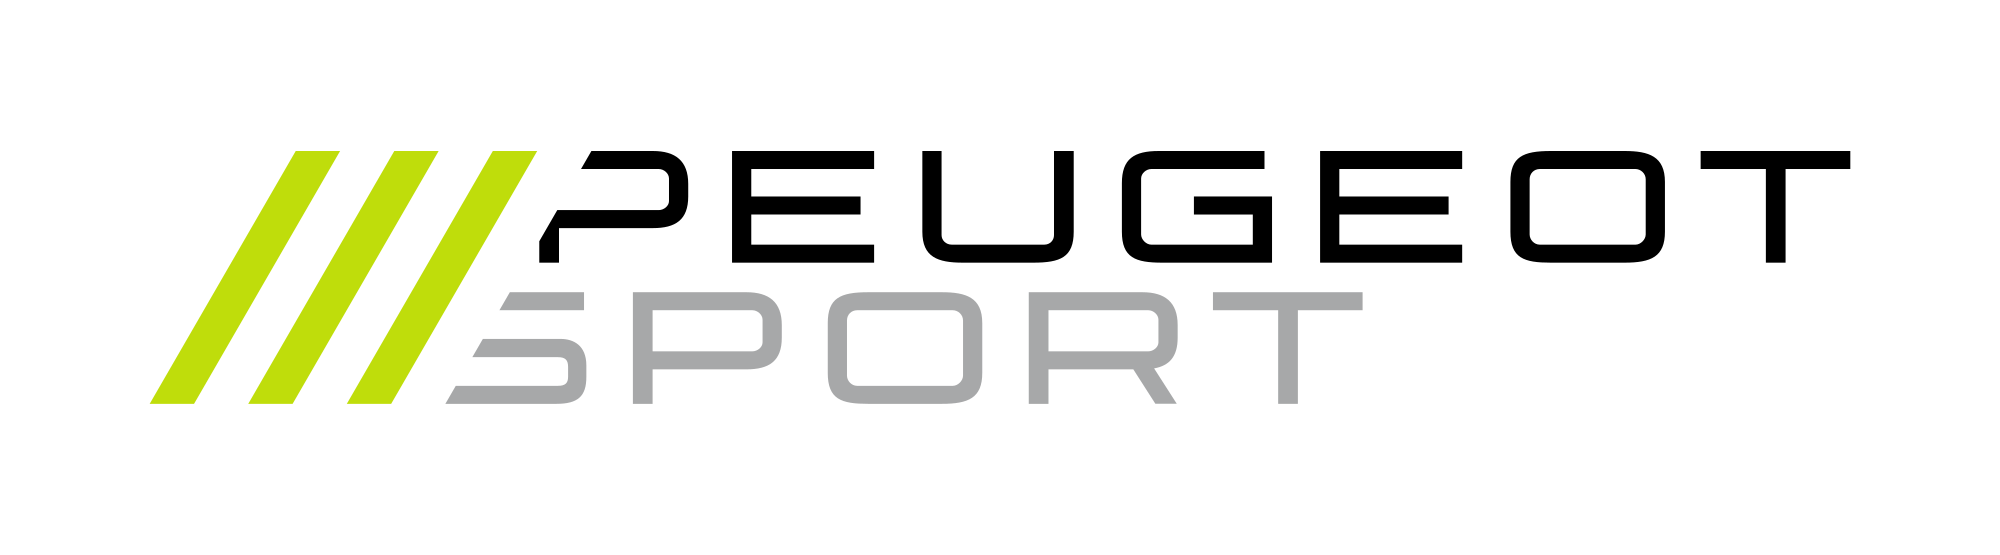 Peugeot Sport